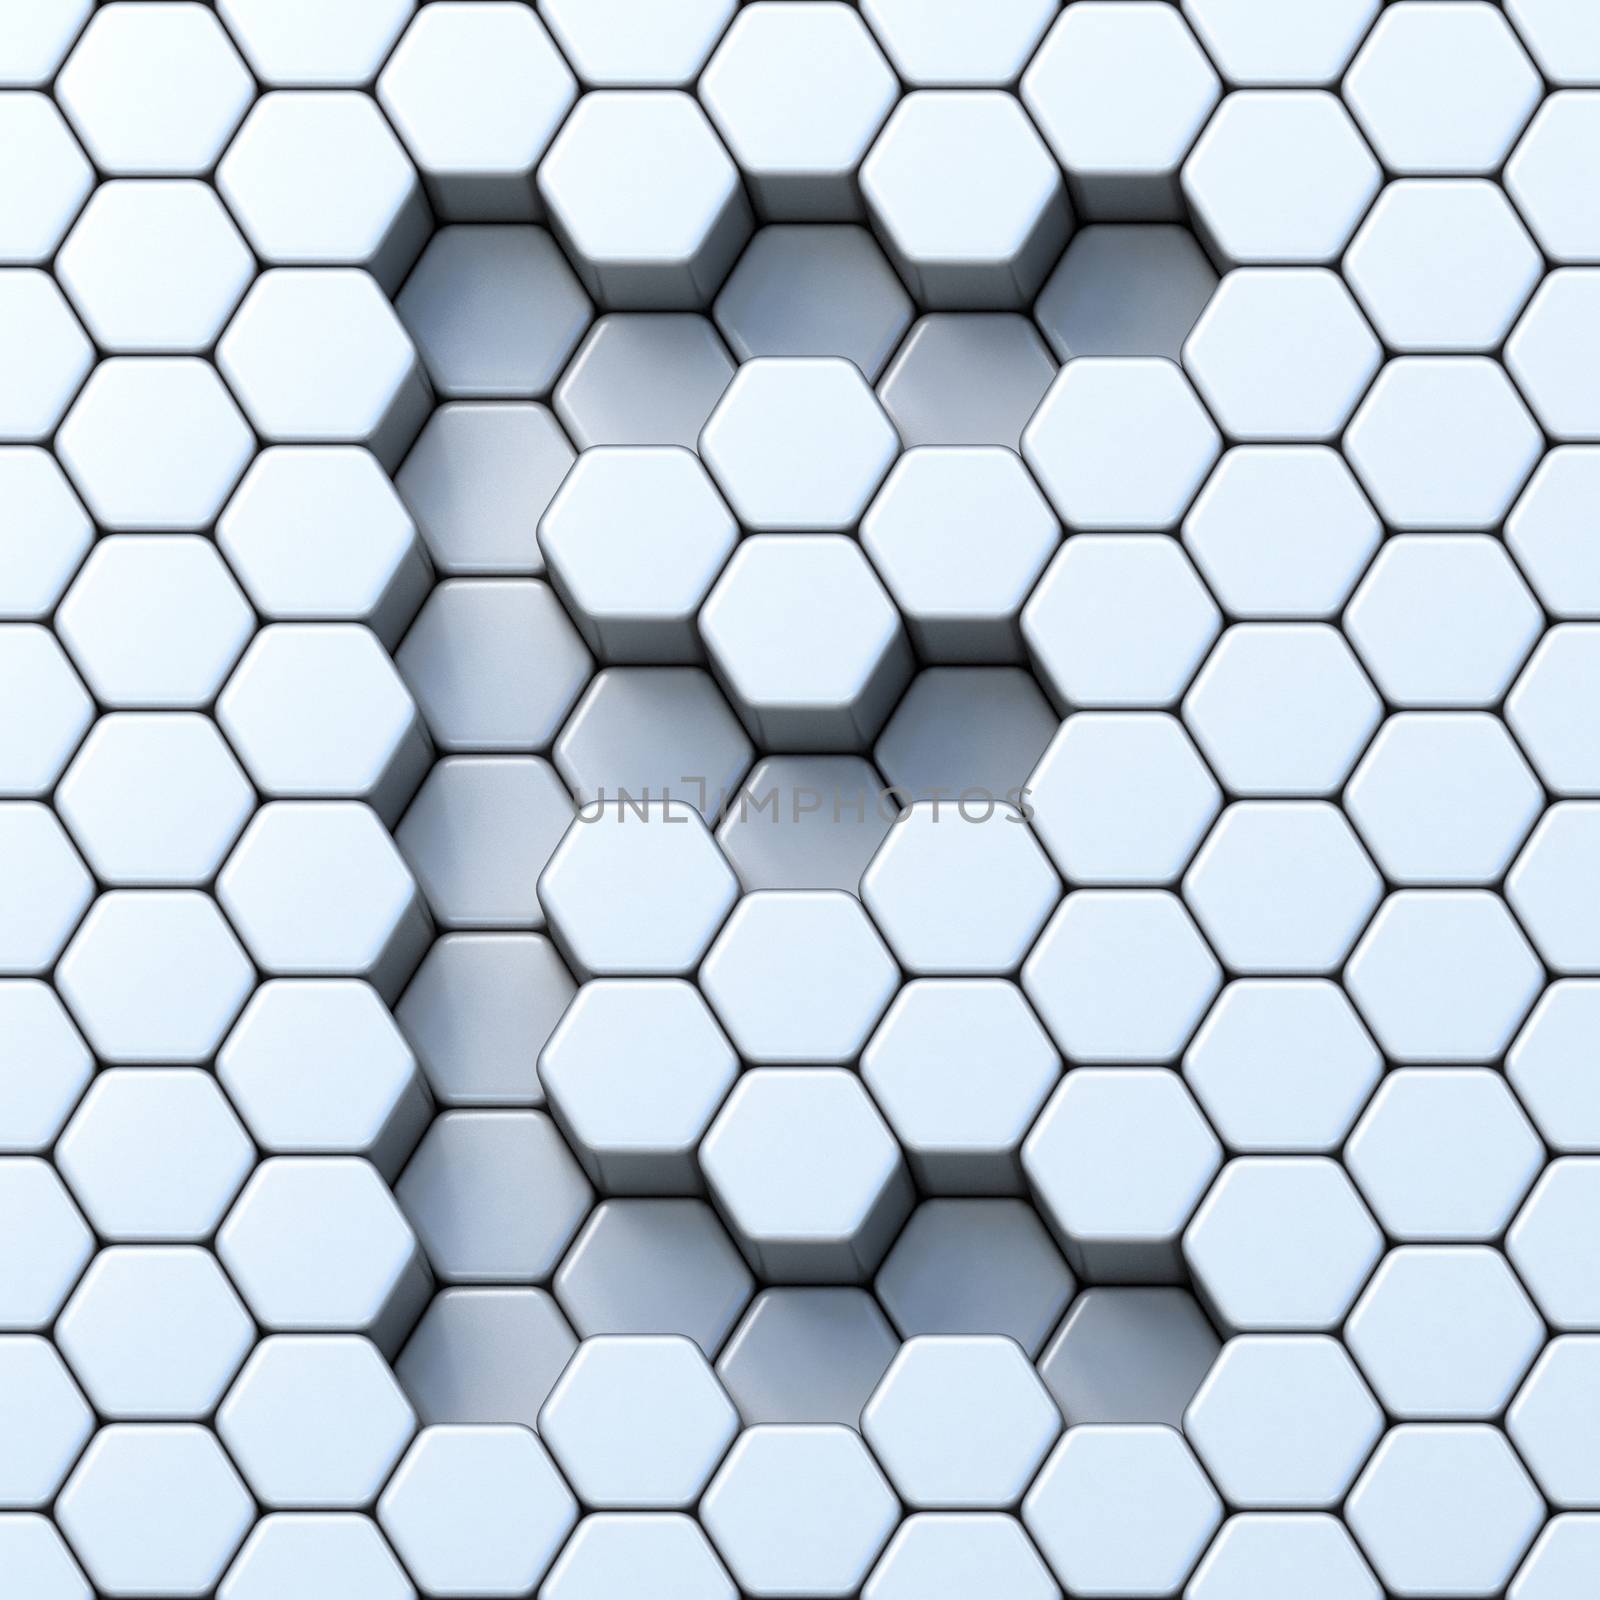 Hexagonal grid letter E 3D by djmilic